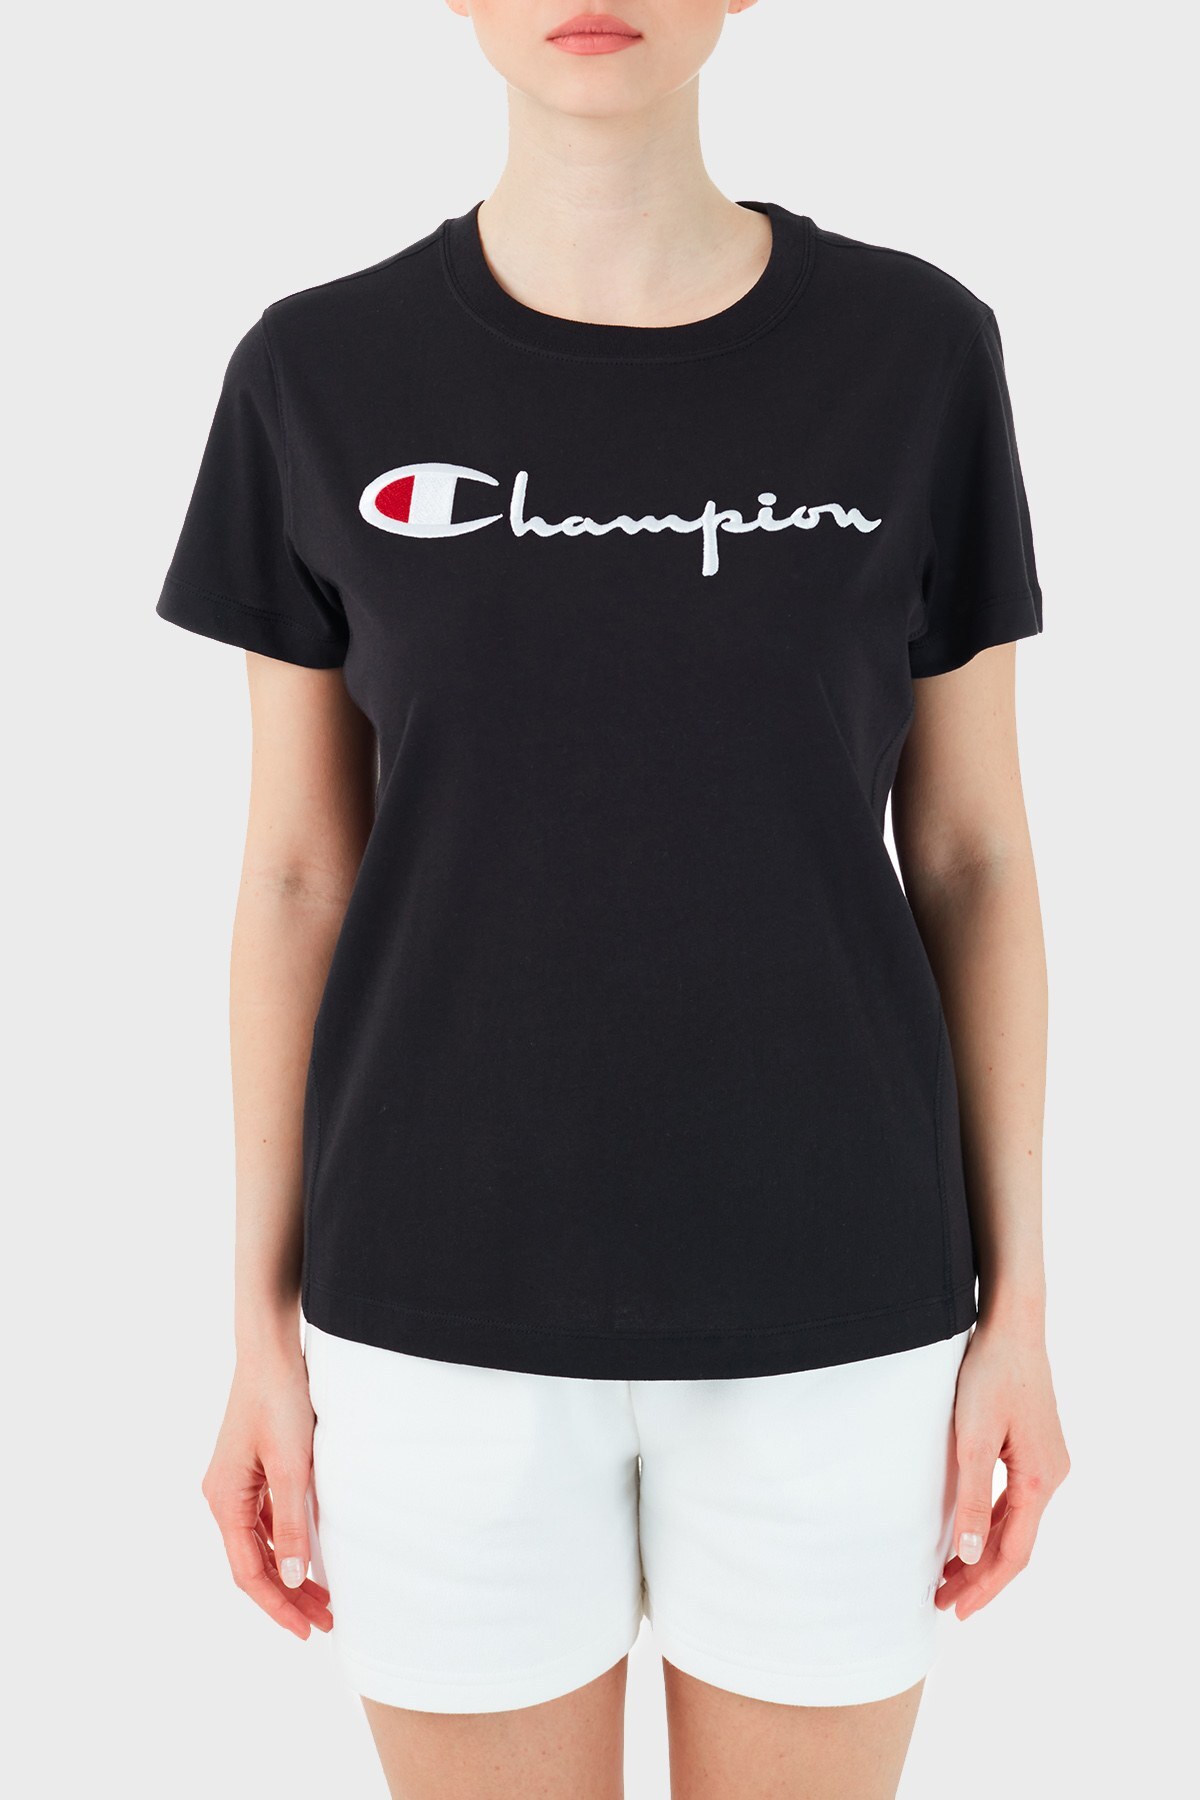 Champion Logo Baskılı Bisiklet Yaka % 100 Pamuk Bayan T Shirt 110992 NBK KK001 SİYAH